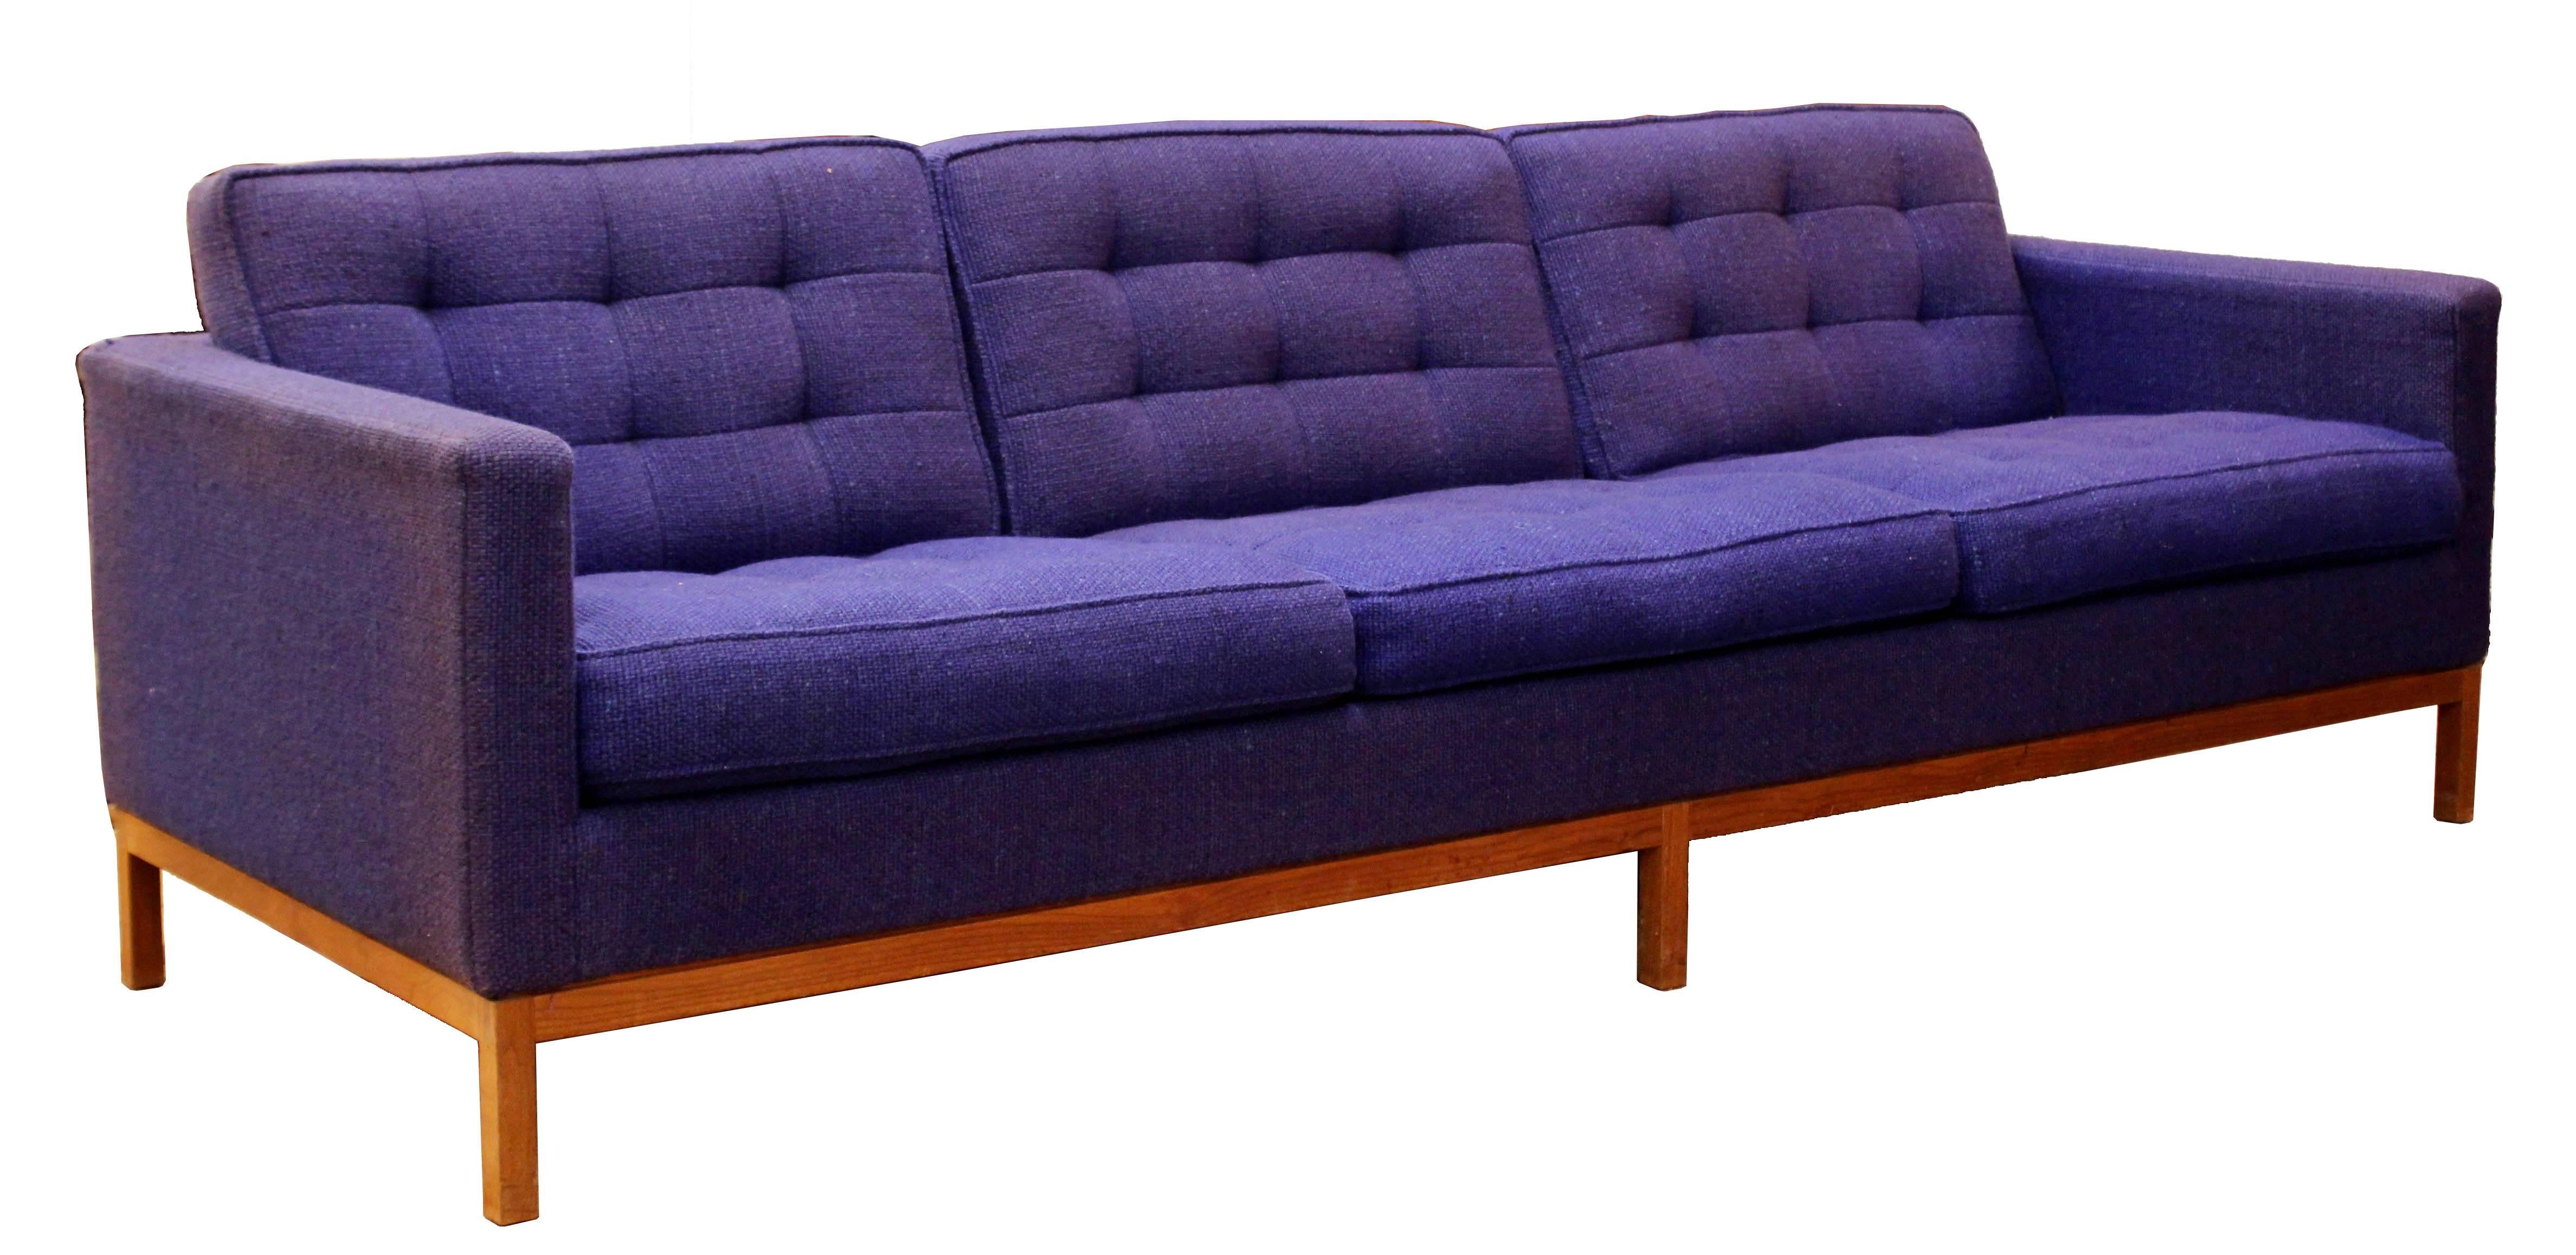 American Mid-Century Modern Florence Knoll Three-Seat Lounge Sofa Model 1205 Wood Frame